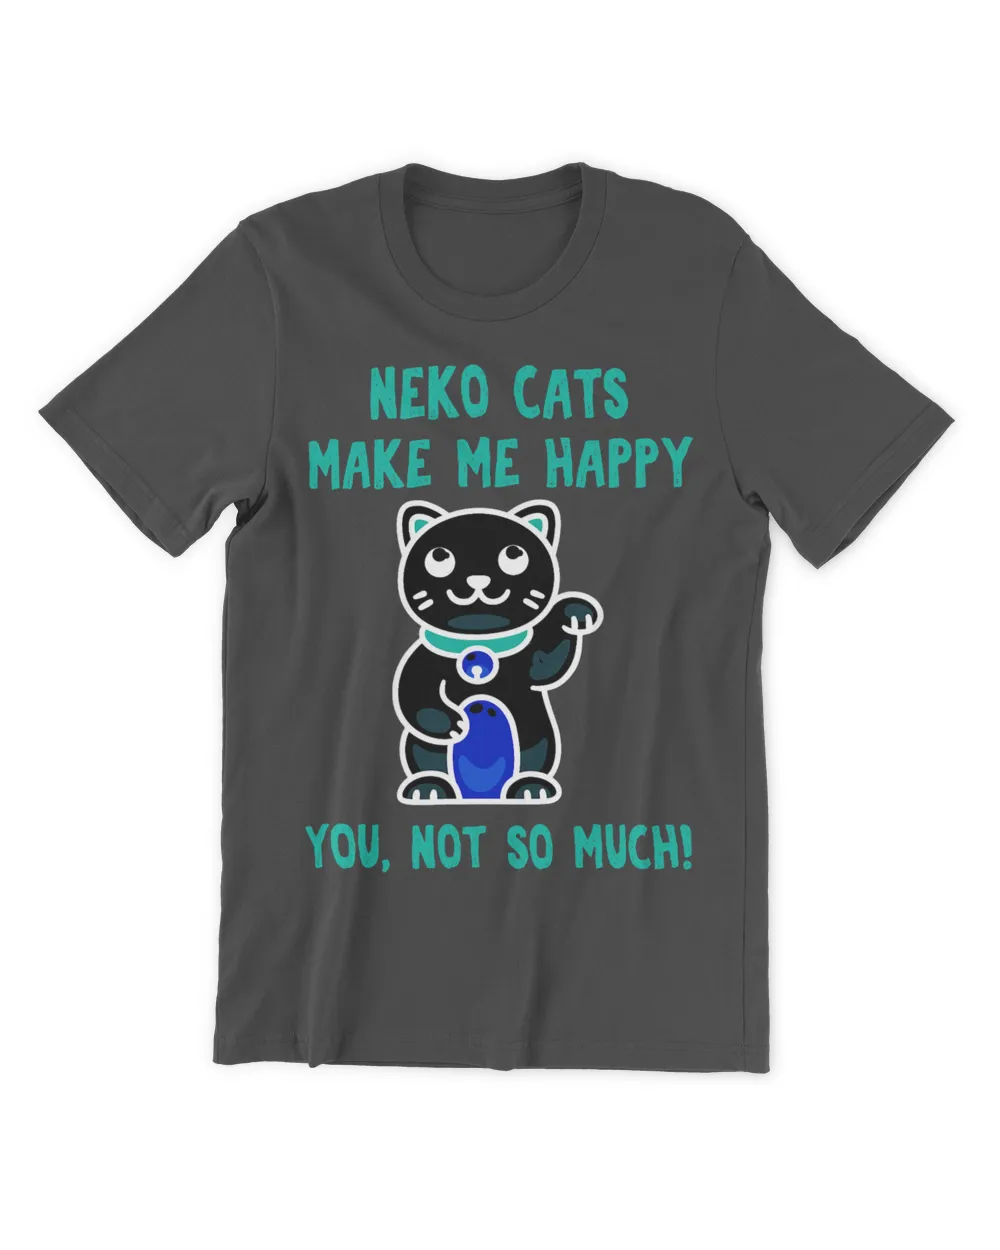 Adorable Neko Cat Illustration Nekomimi 214 9